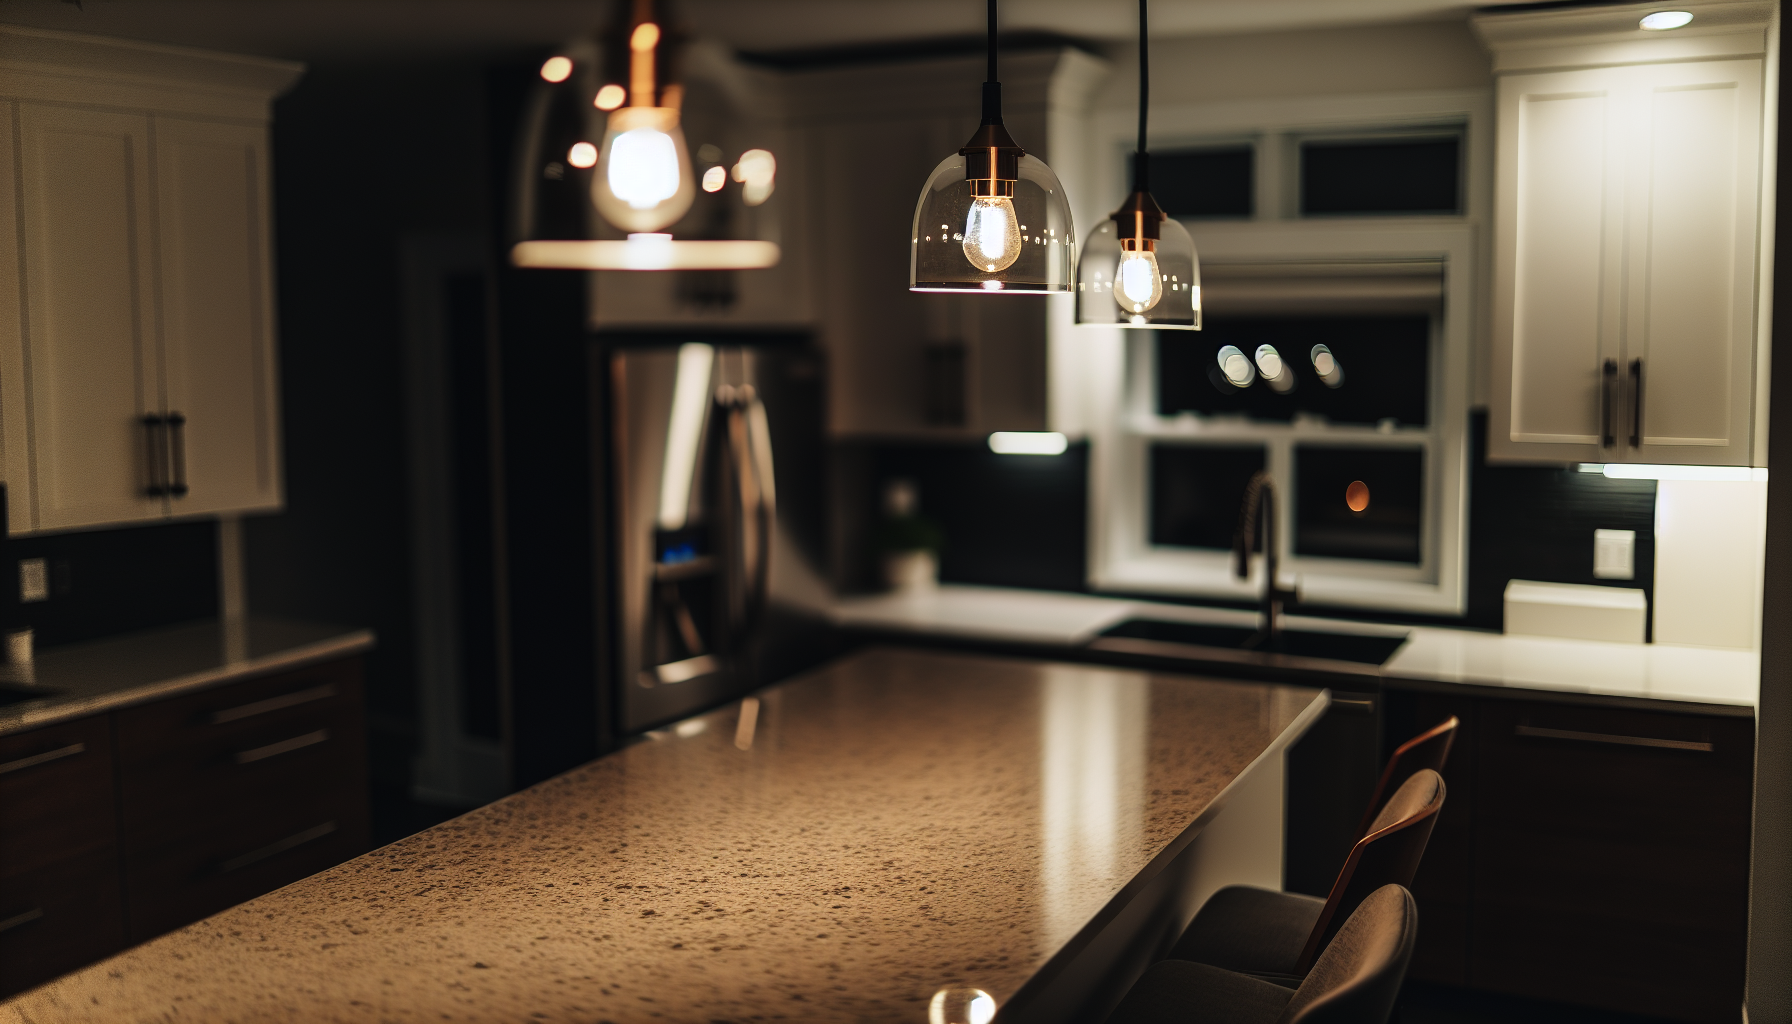 Pendant lights over a modern kitchen island